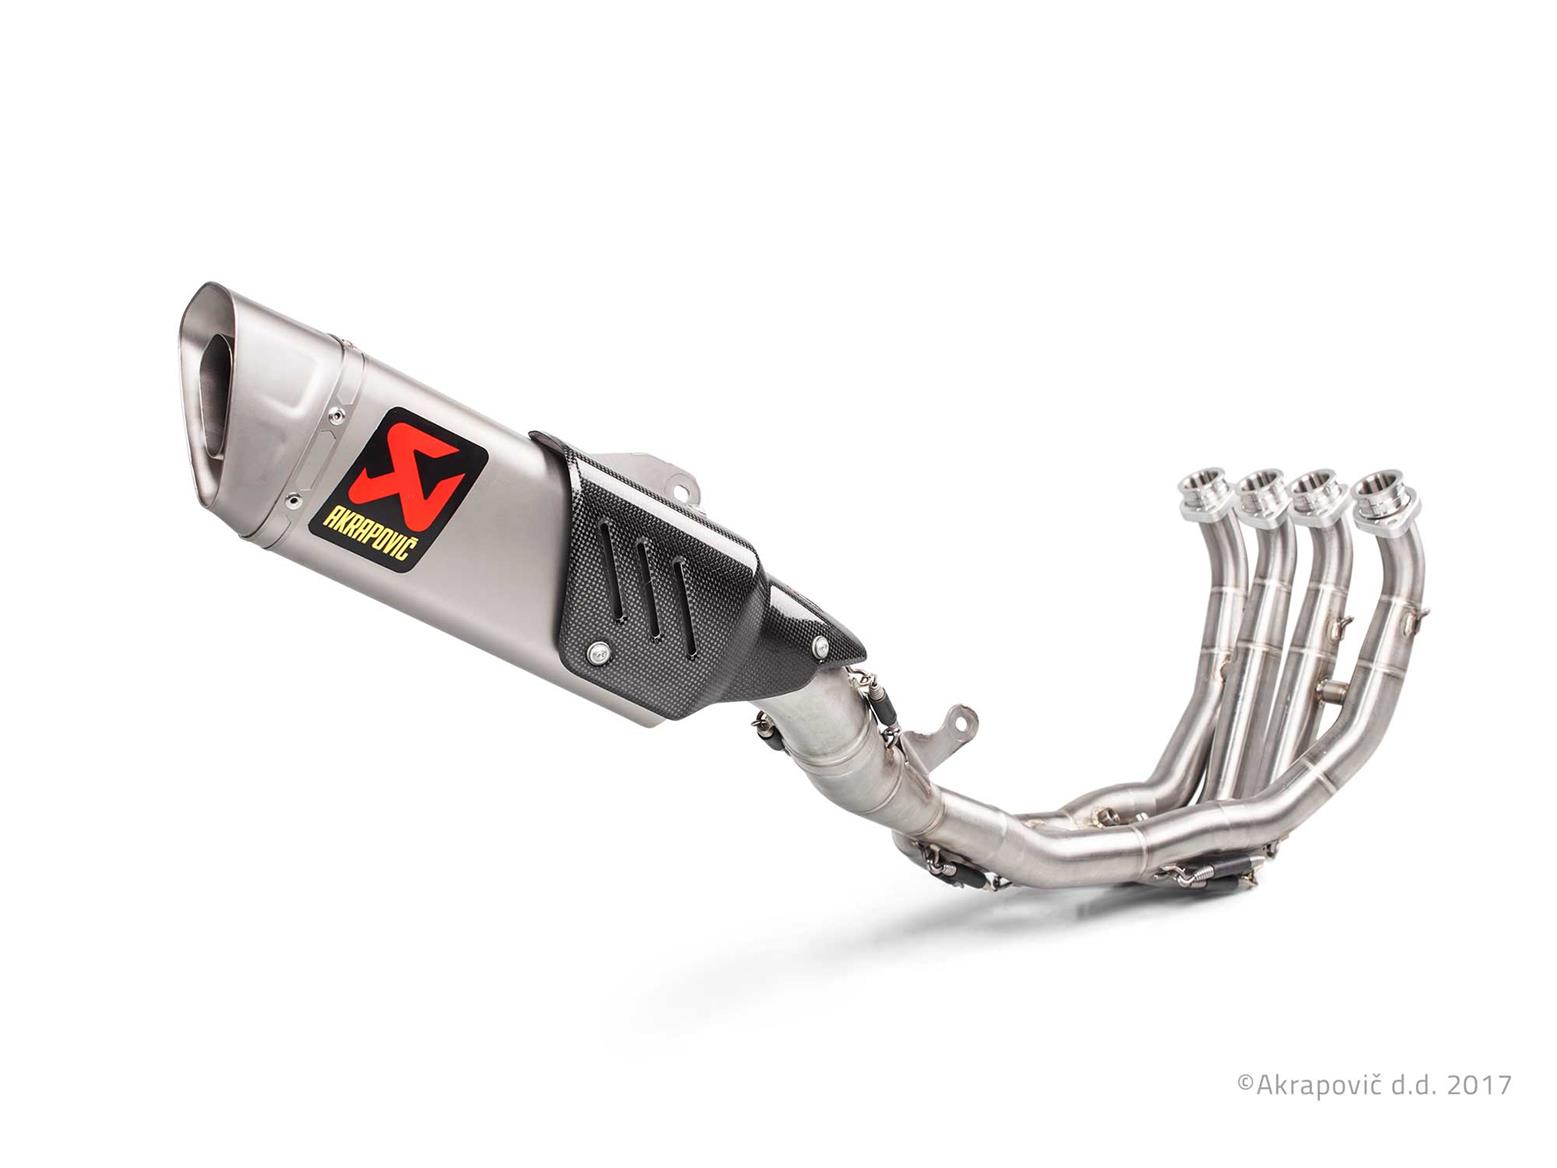 Akrapovic exhaust range for 2017 Yamaha R6